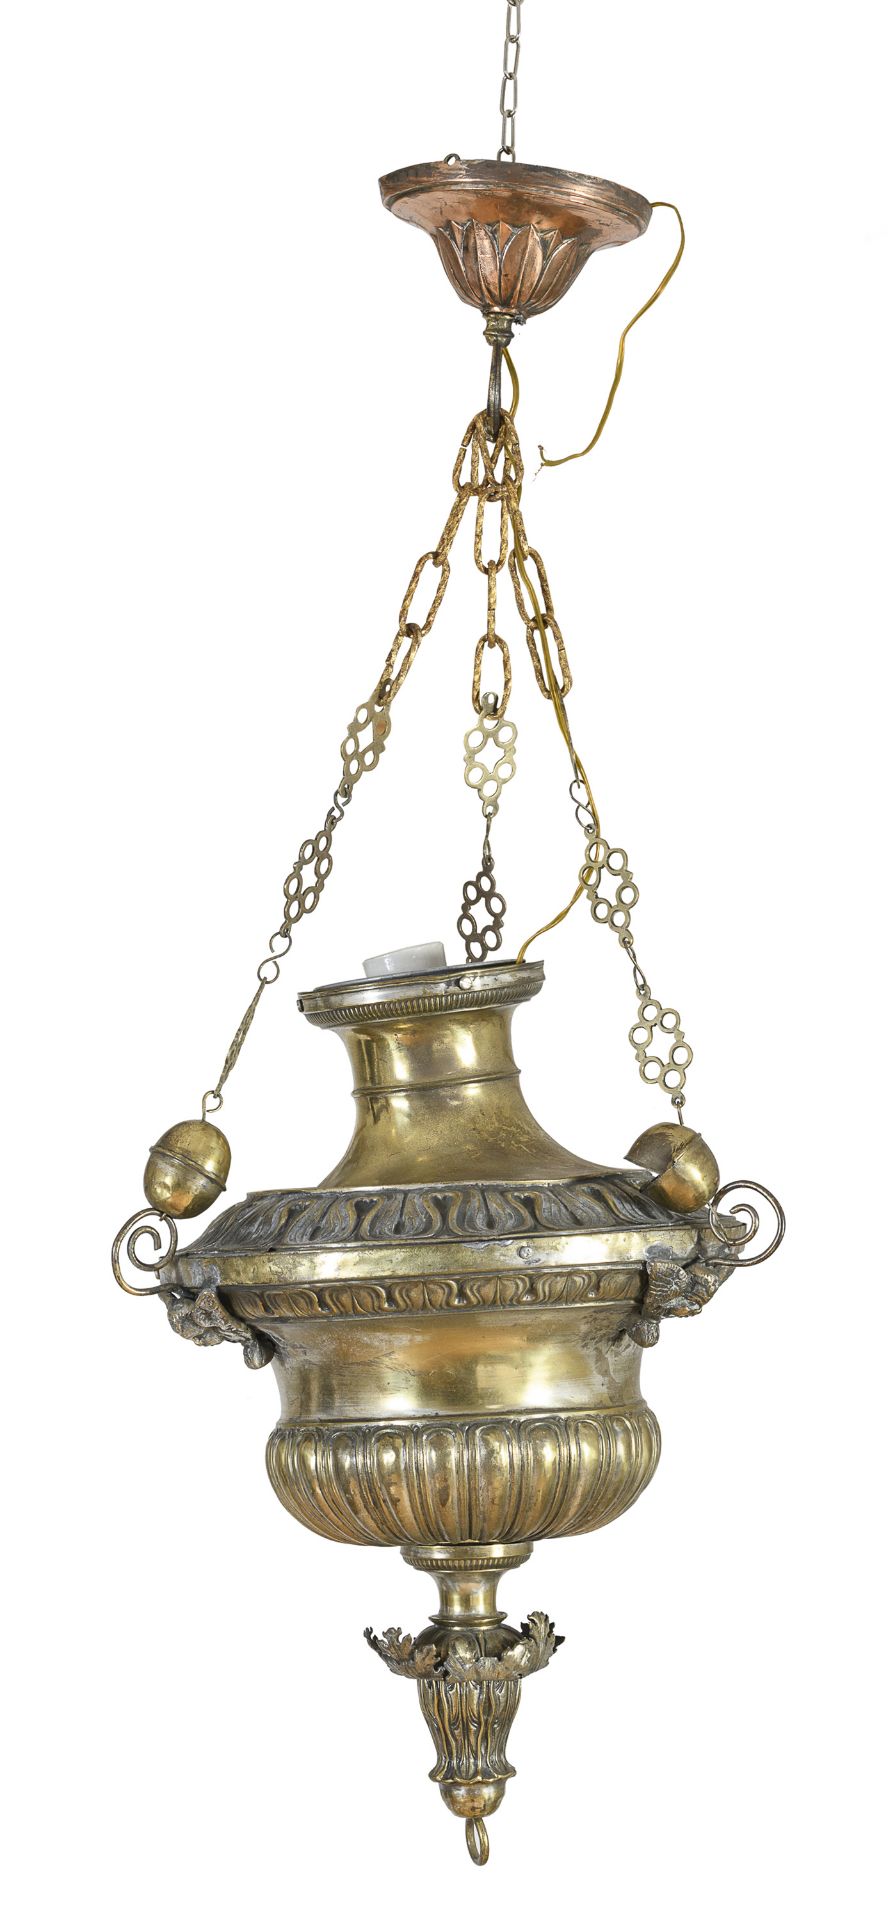 CHURCH LAMP IN GILT METAL 18th CENTURY